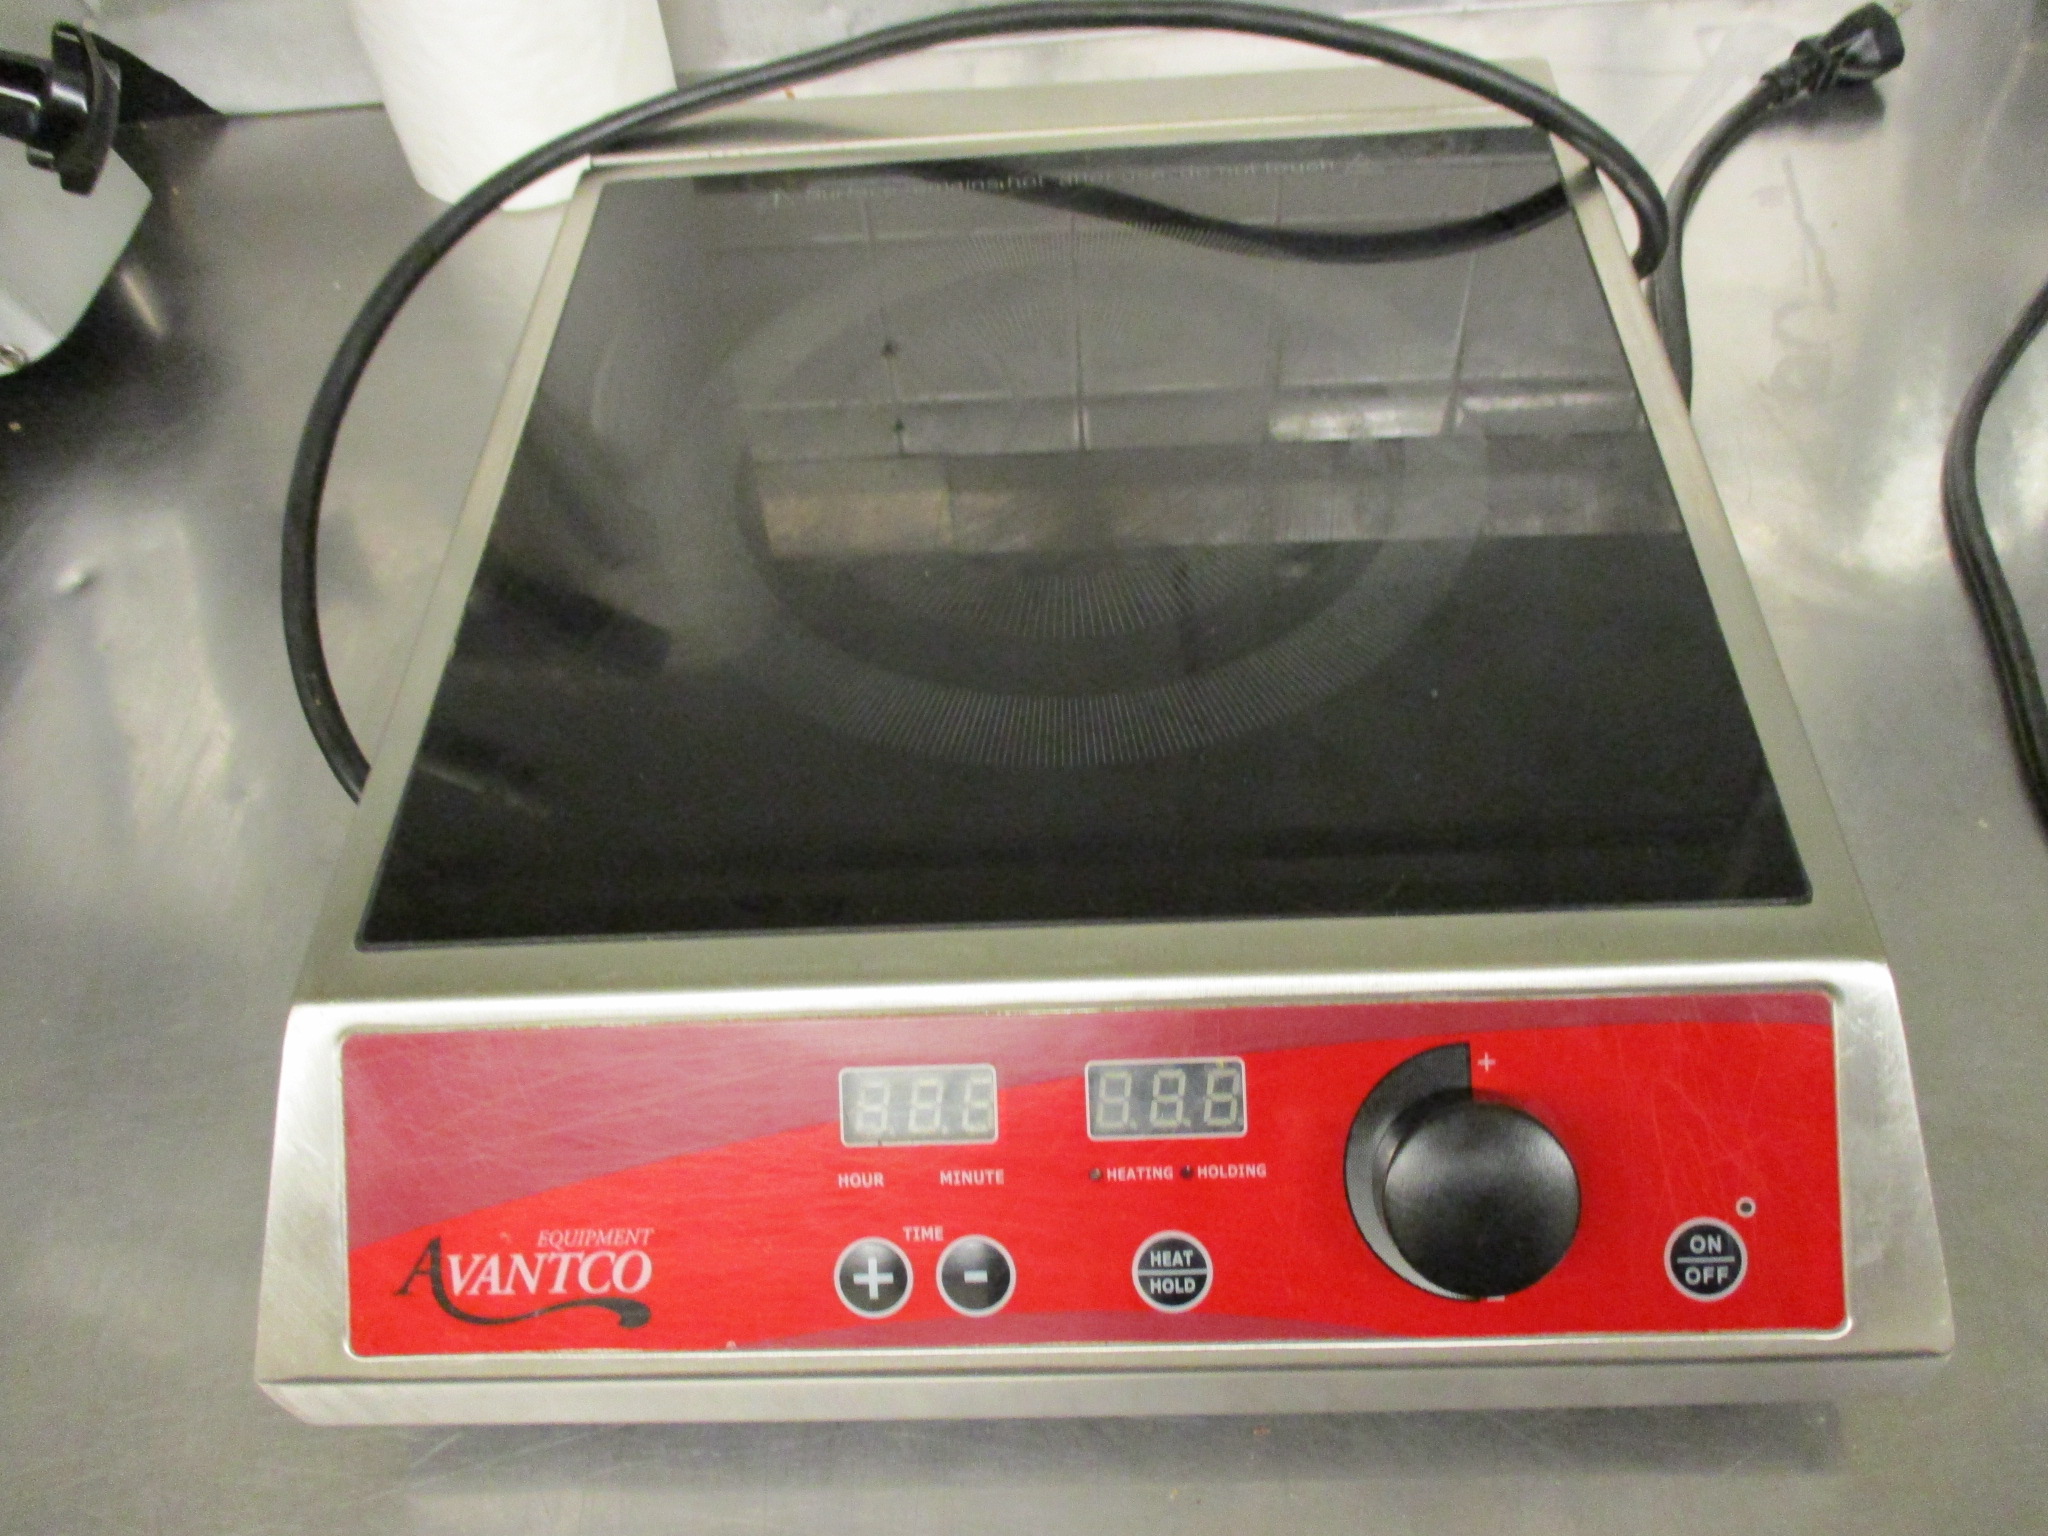 Avantco IC18DB Double Countertop Induction Range / Cooker - 120V